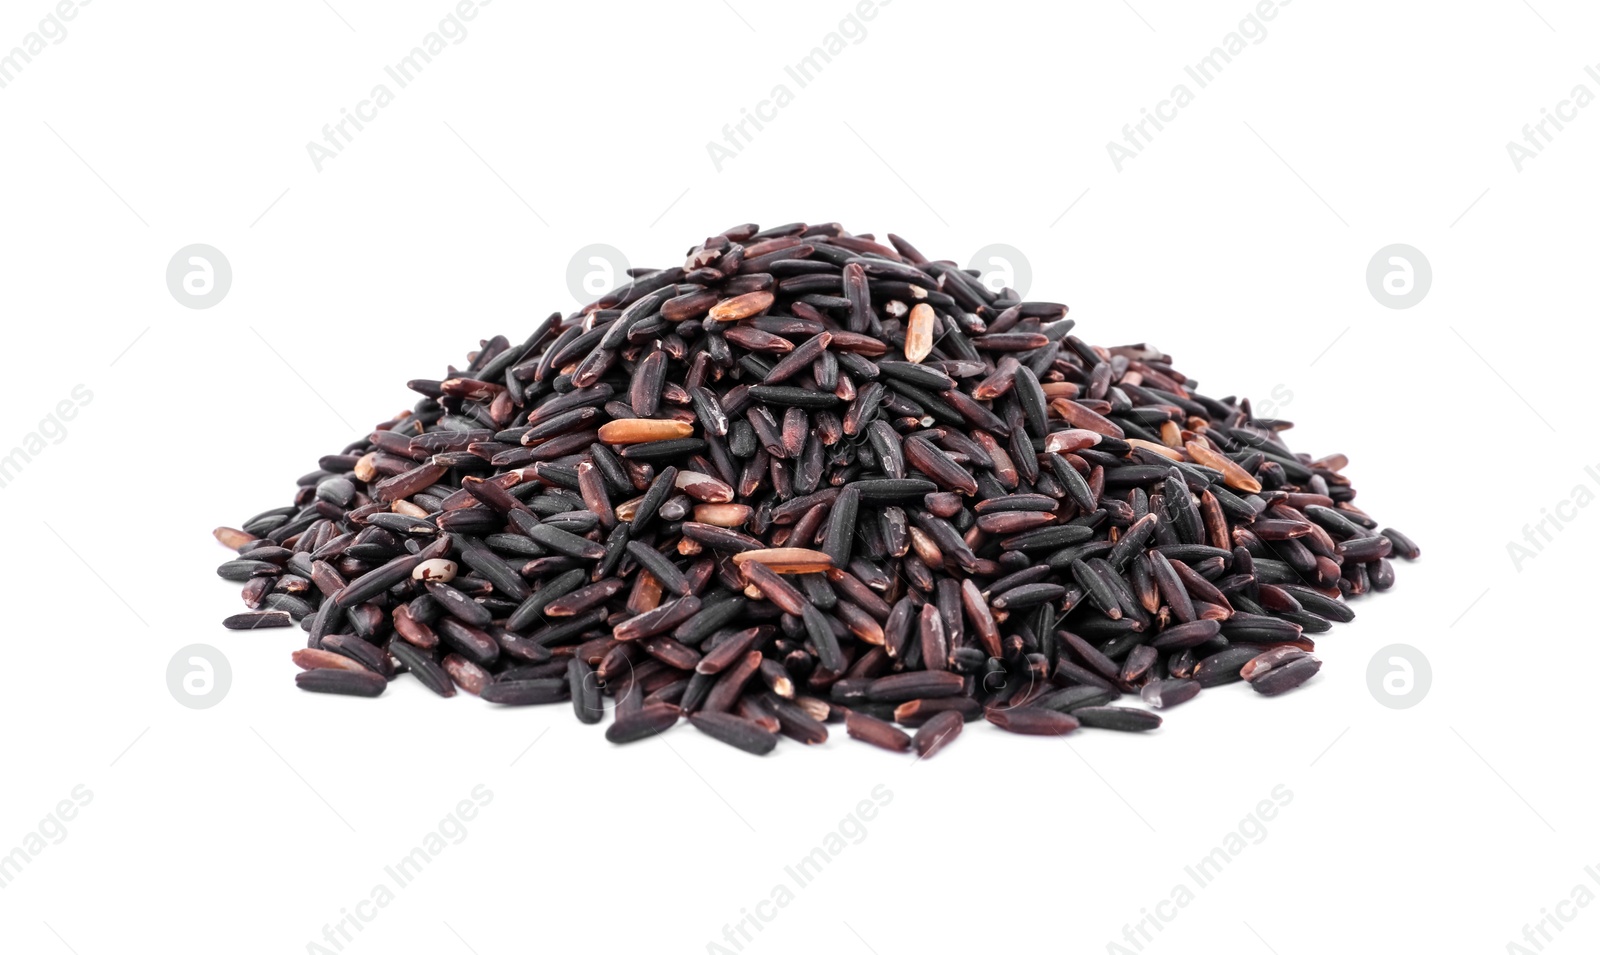 Photo of Pile of raw black rice isolated on white